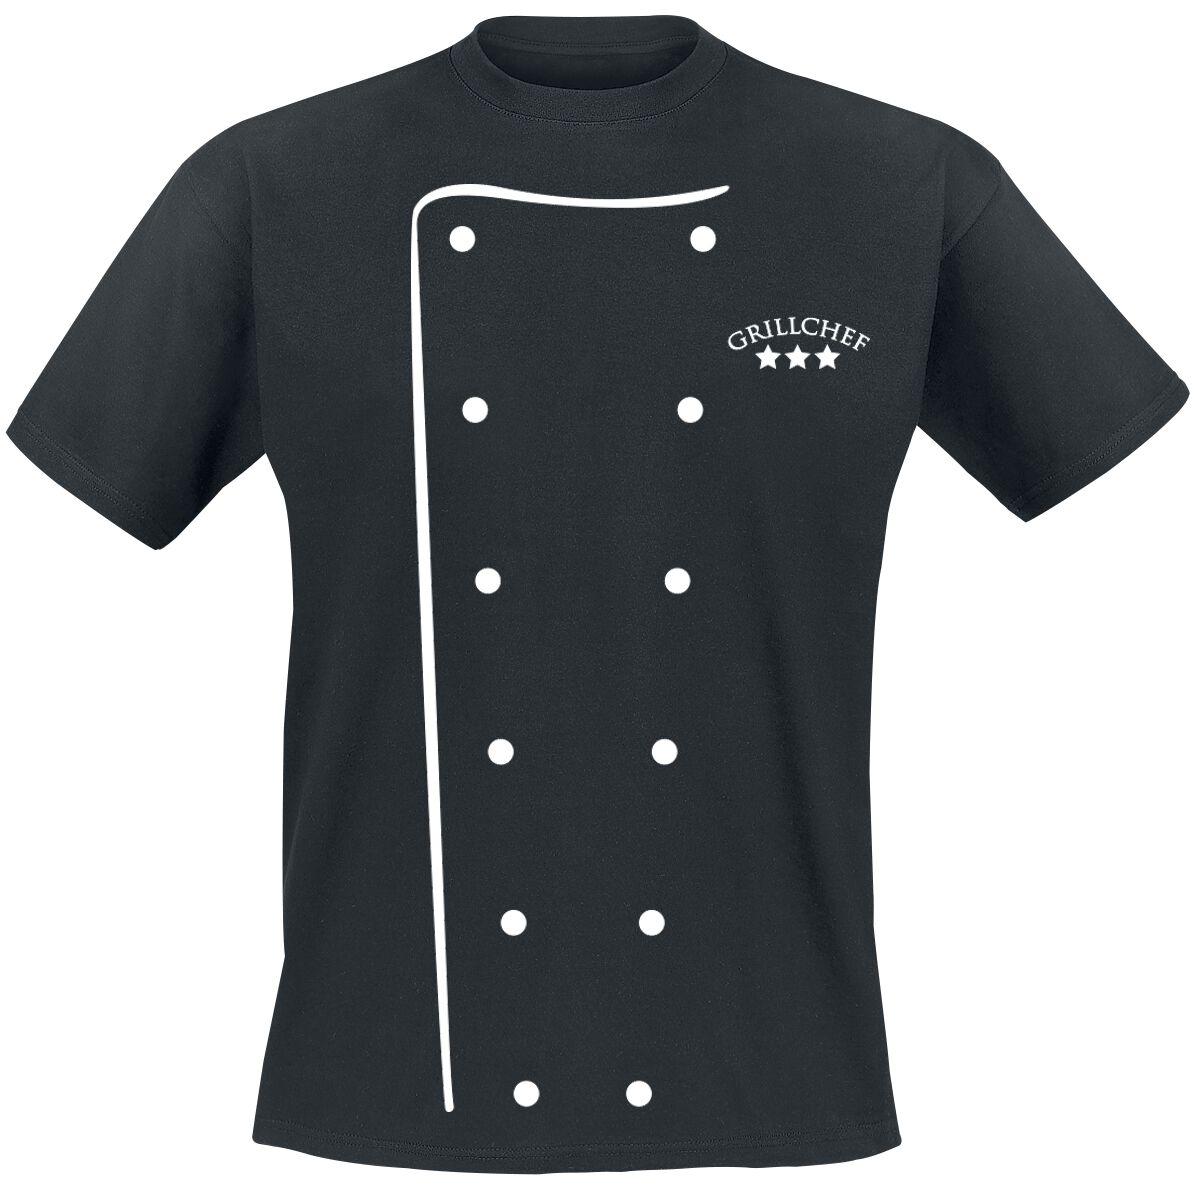 Food Grillchef T-Shirt schwarz in L